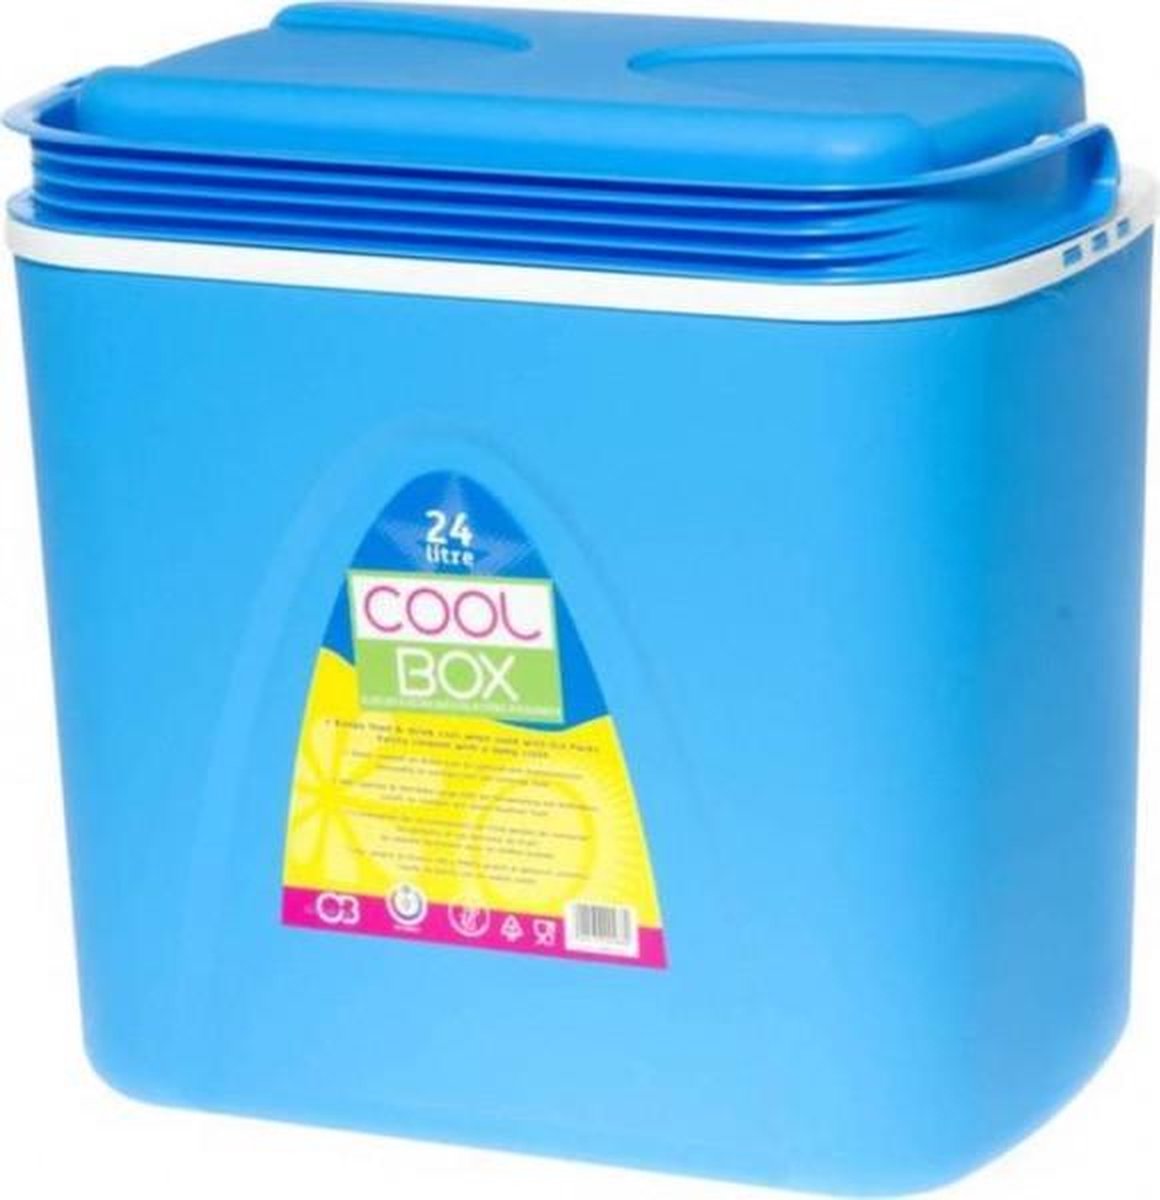 Zens Koelbox 24 Liter - Blauw